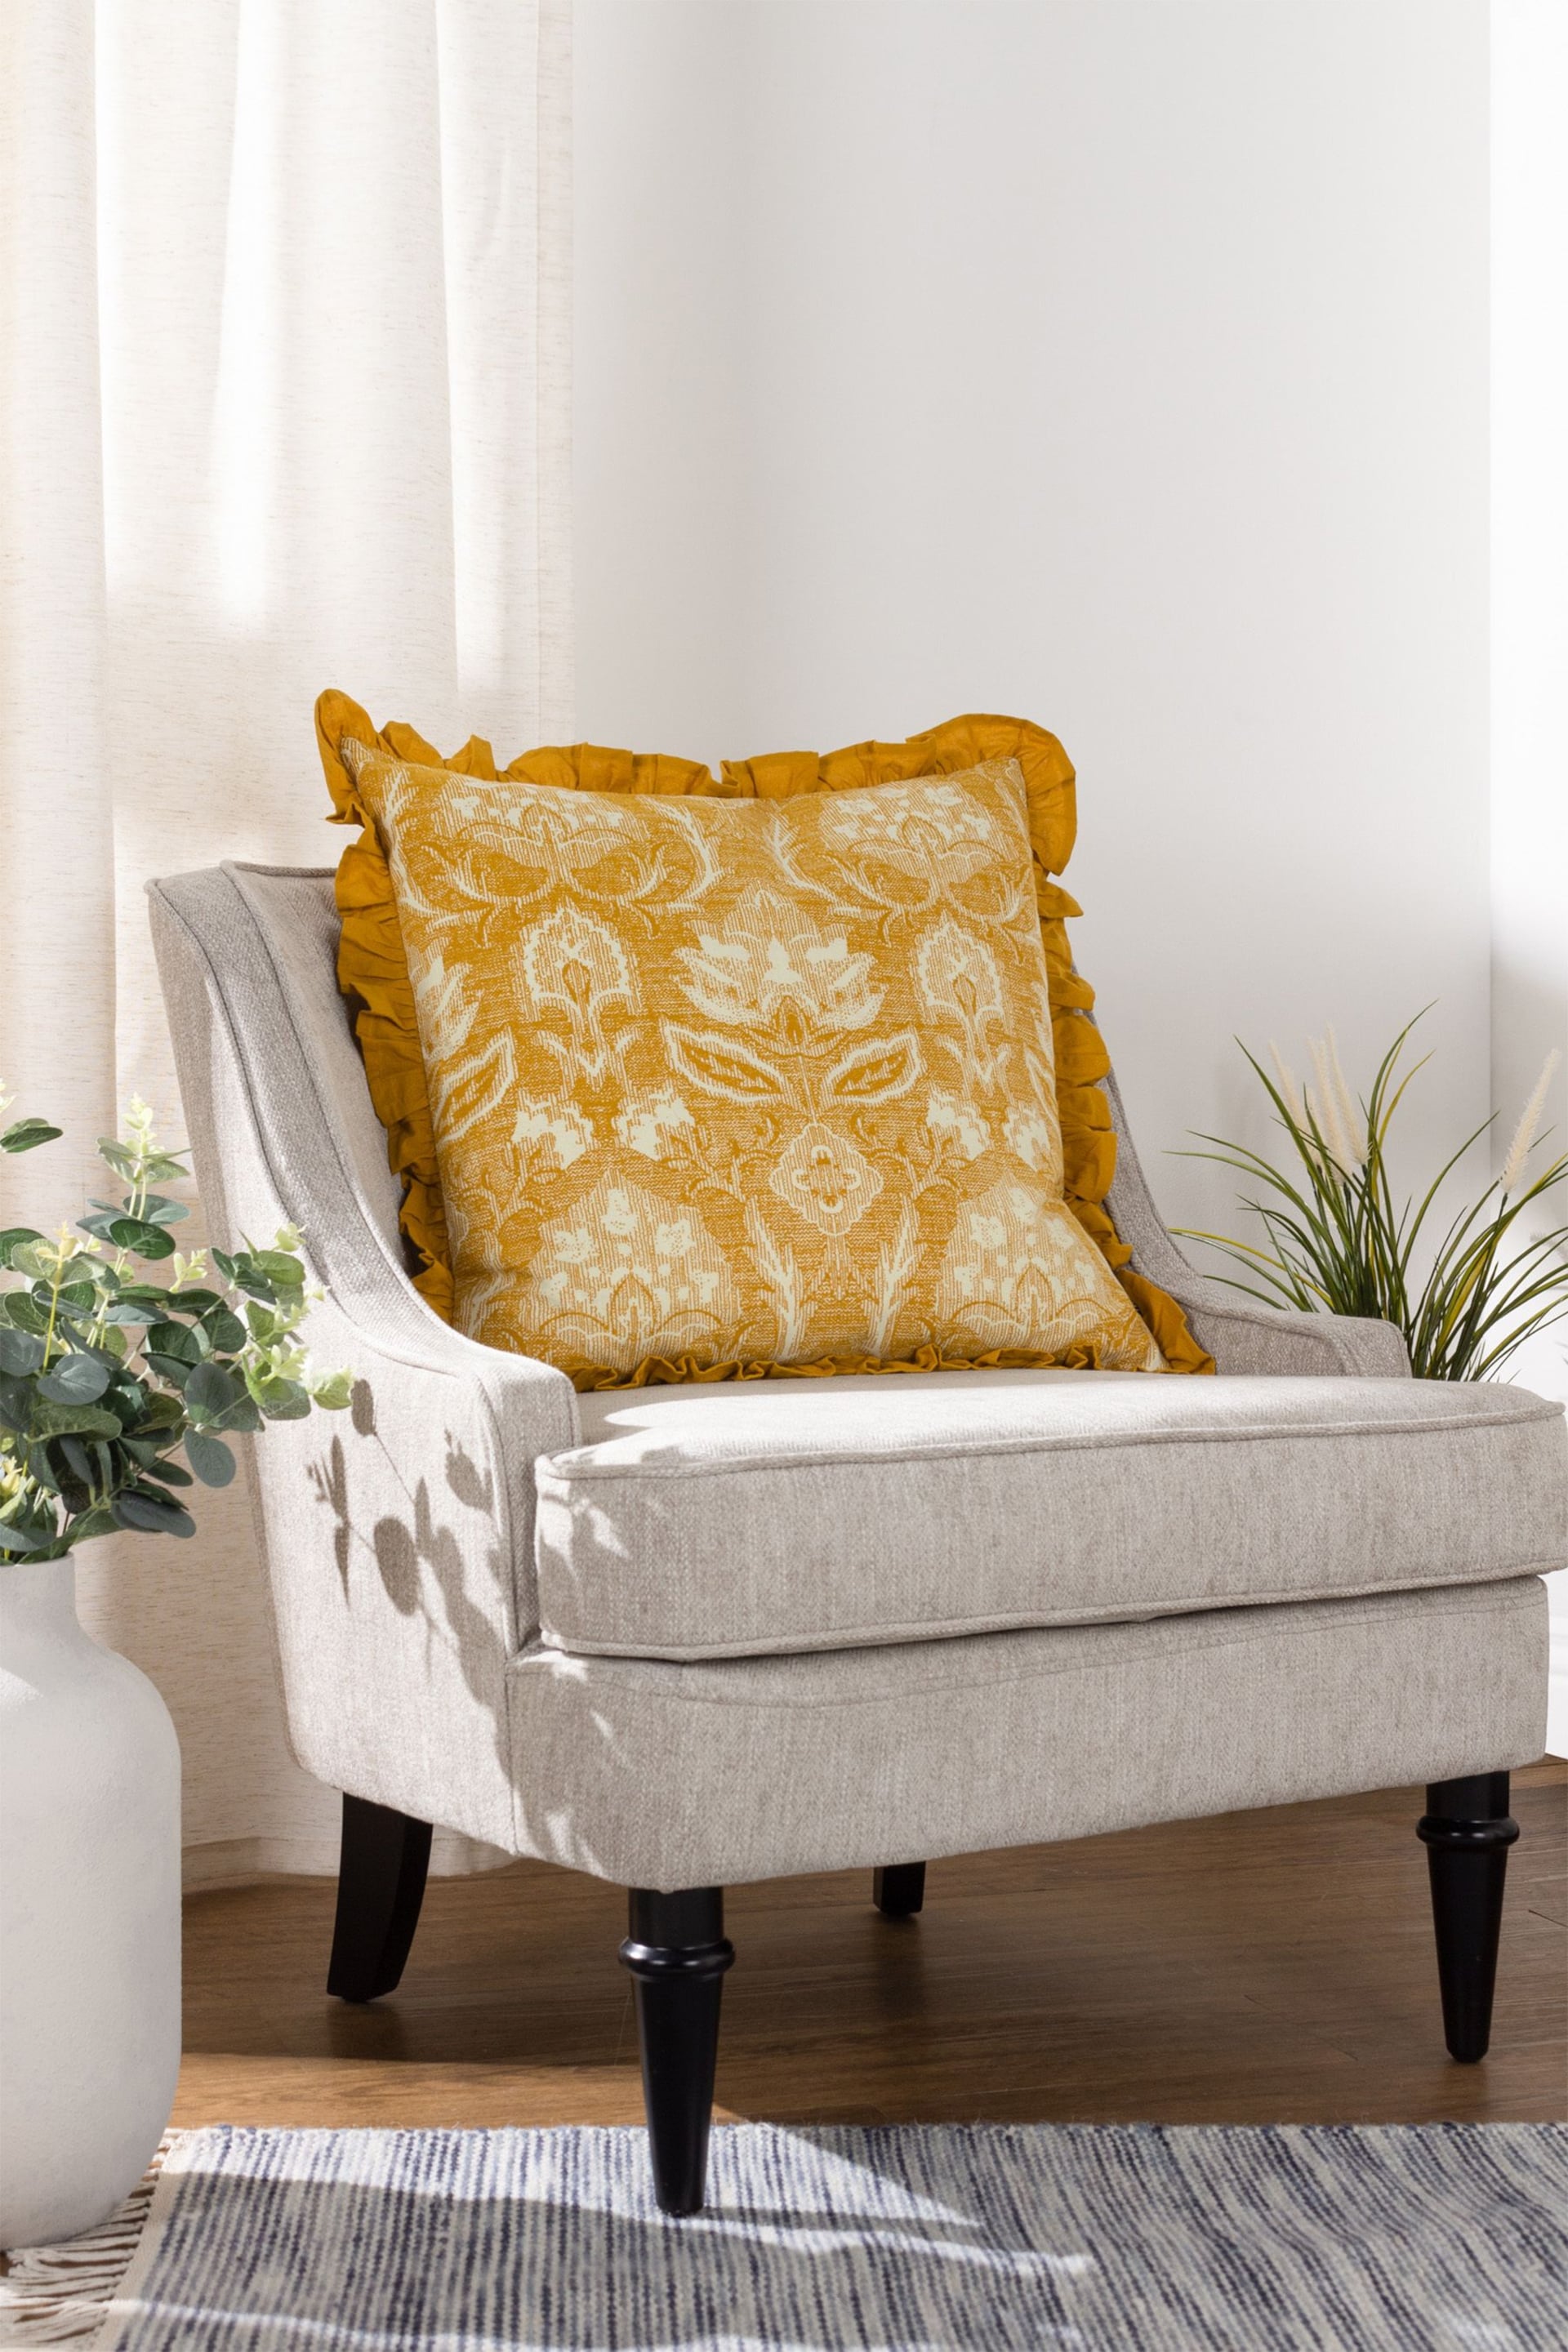 Riva Paoletti Ochre Yellow Kirkton Floral Tile Cotton Pleated Cushion - Image 1 of 6